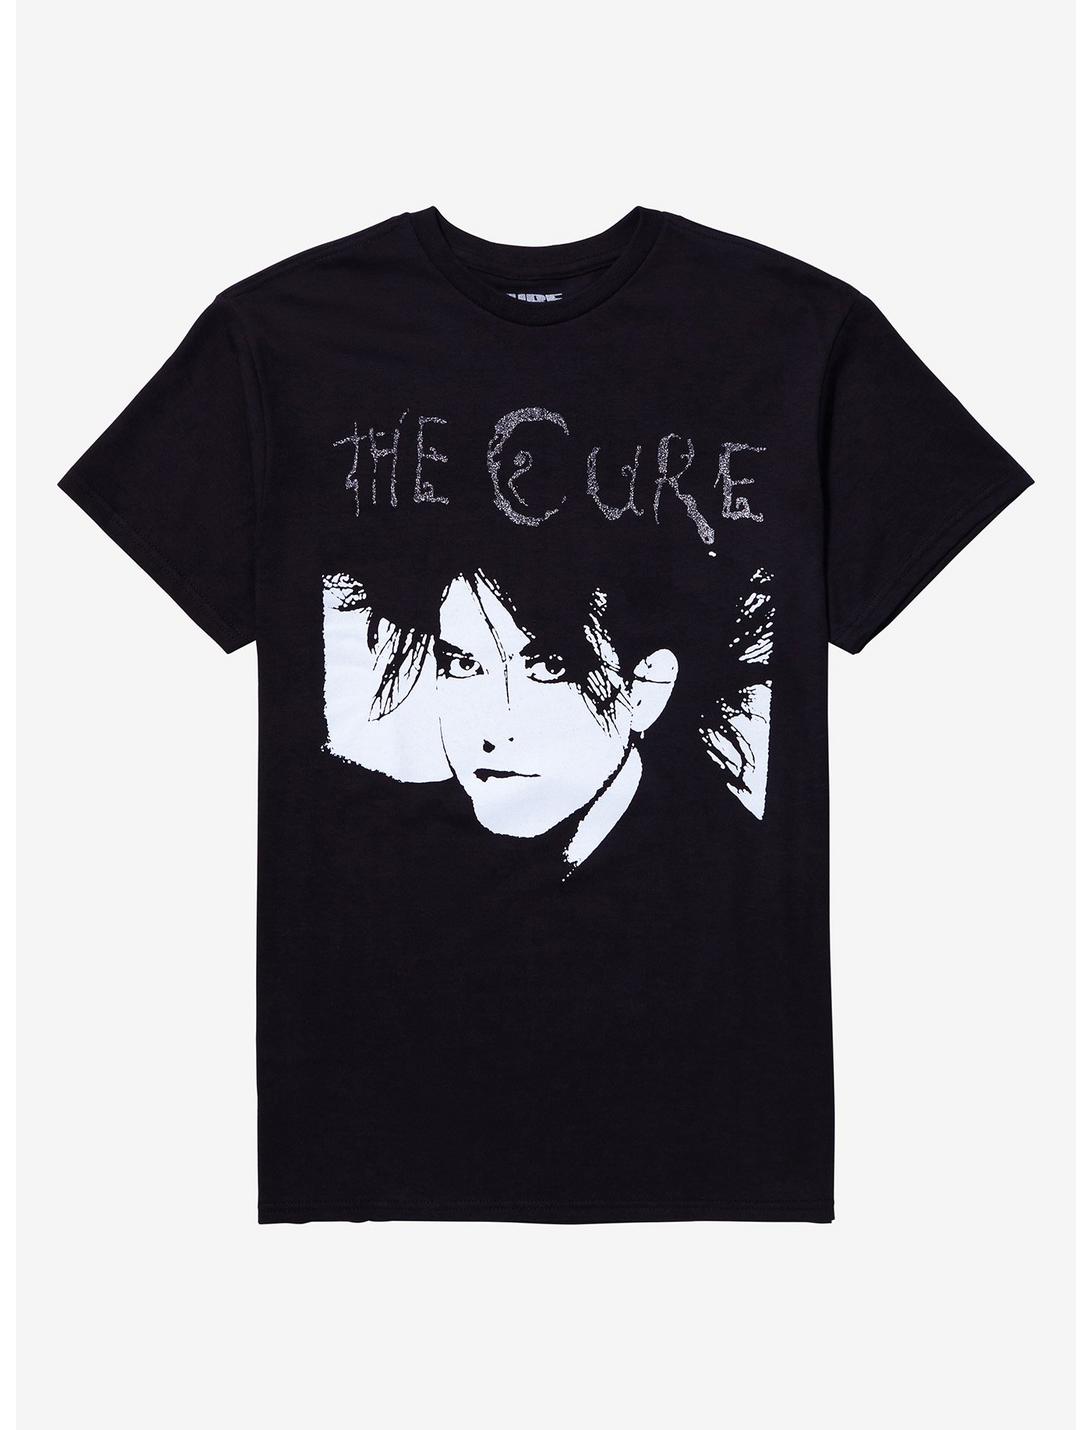 The Cure Glitter Logo Boyfriend Fit Girls T-Shirt, BLACK, hi-res